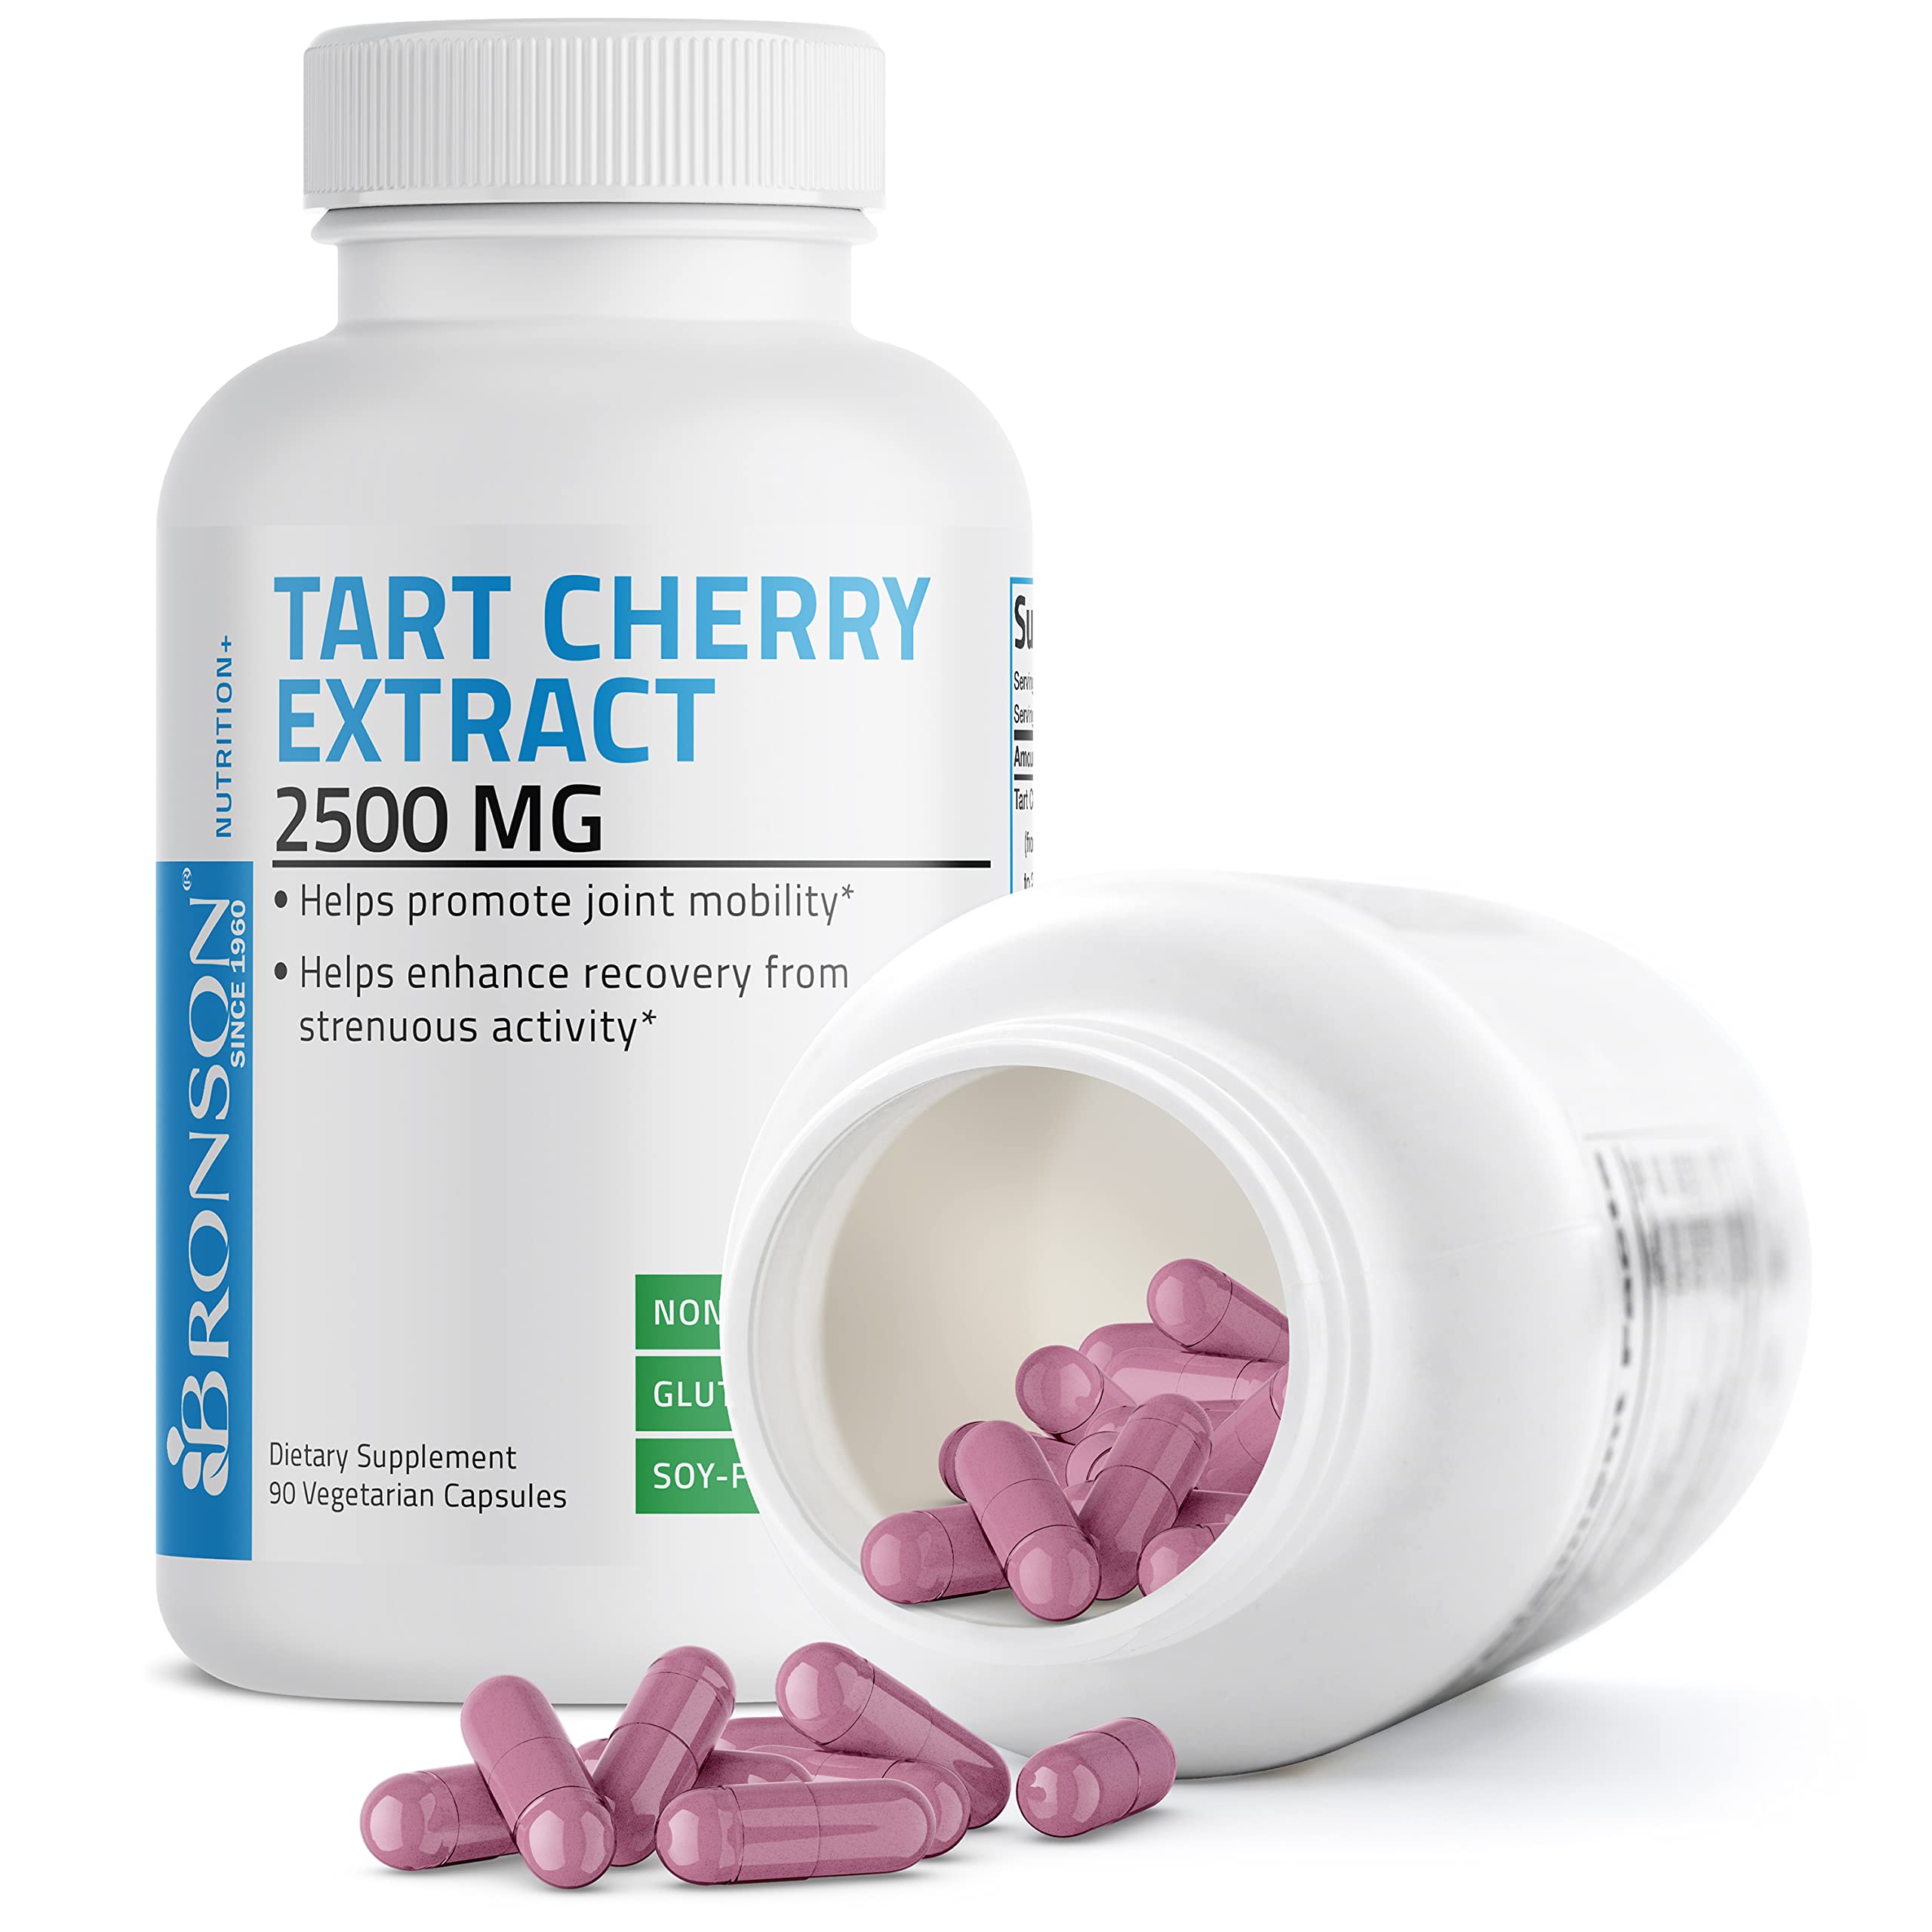 Tart Cherry Extract 2500 mg Premium Non-GMO Formula Packed with Antioxidants and Flavonoids, 90 Vegetarian Capsules